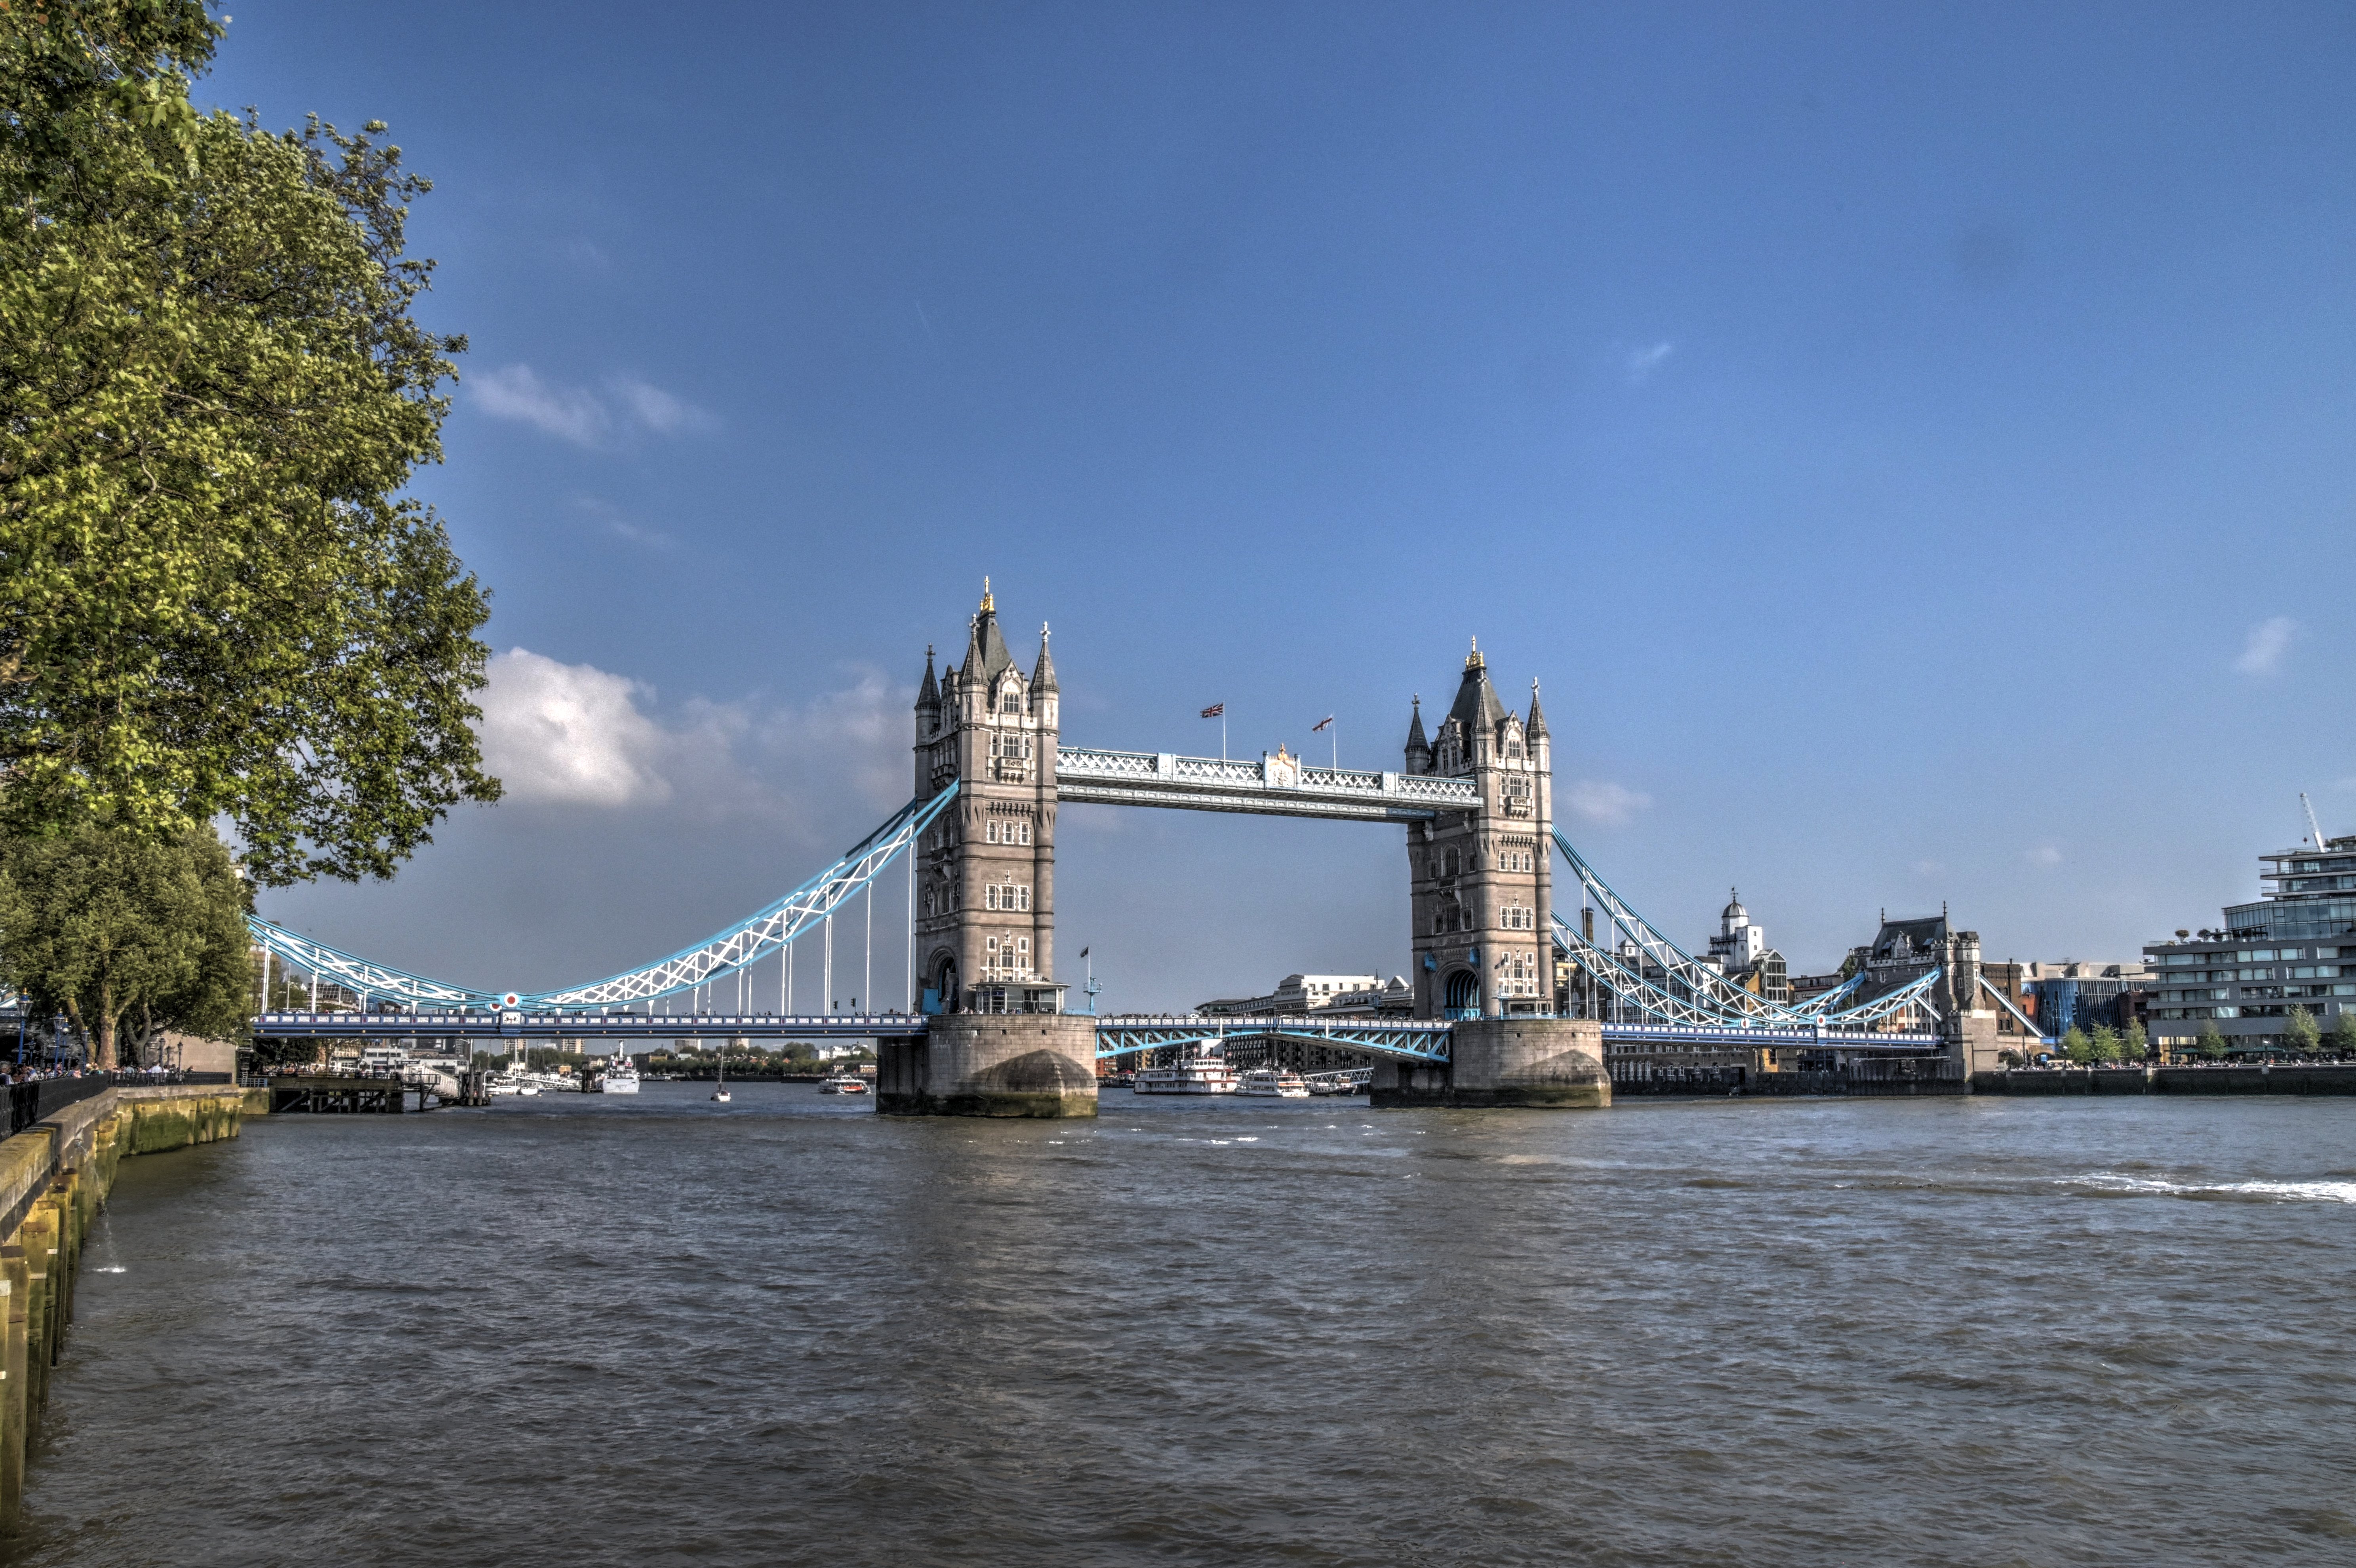 HistoricBridges.org - Tower Bridge Photo Gallery